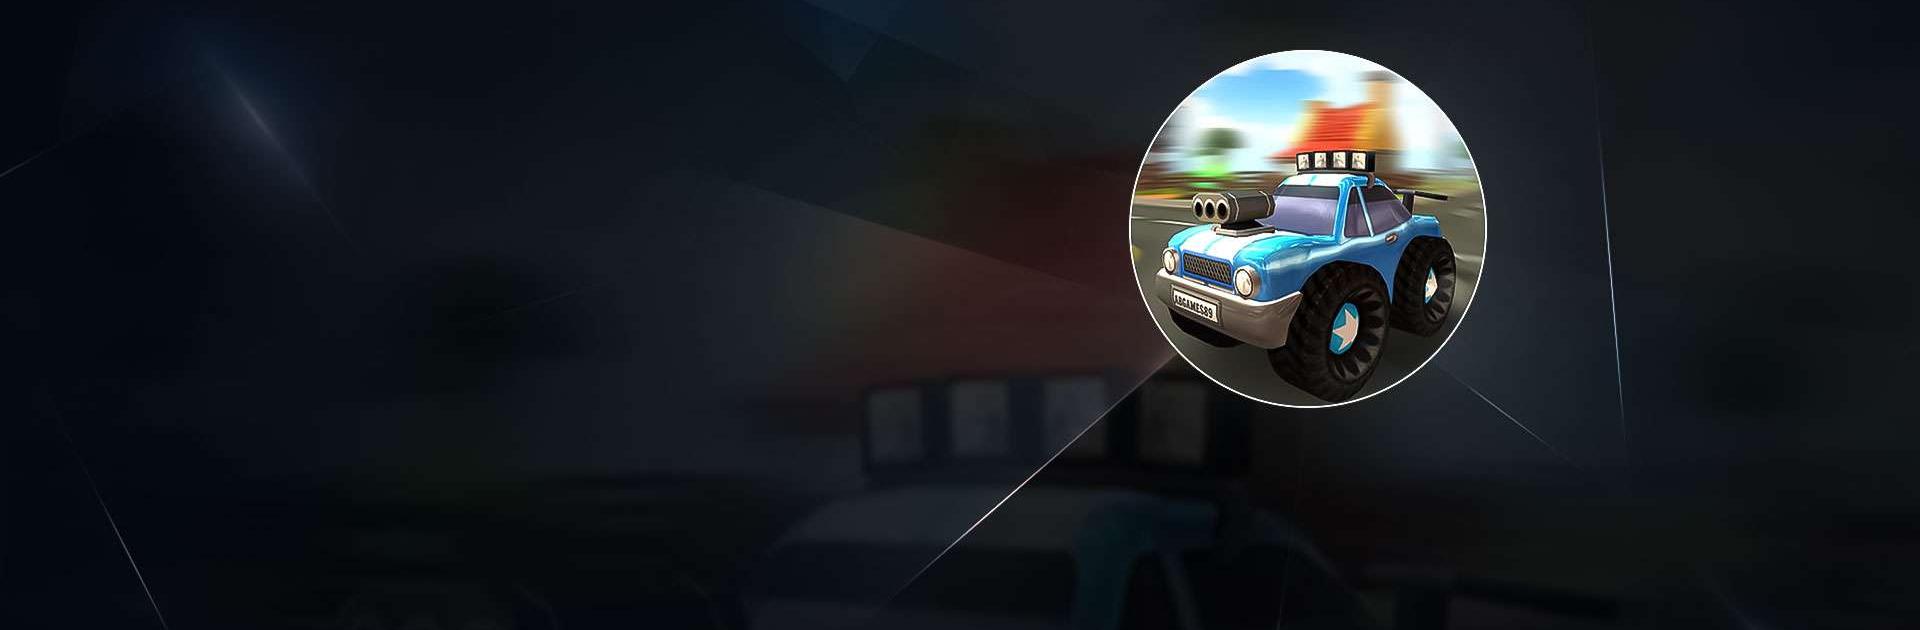 Driving simulator VAZ 2108 SE – Apps on Google Play